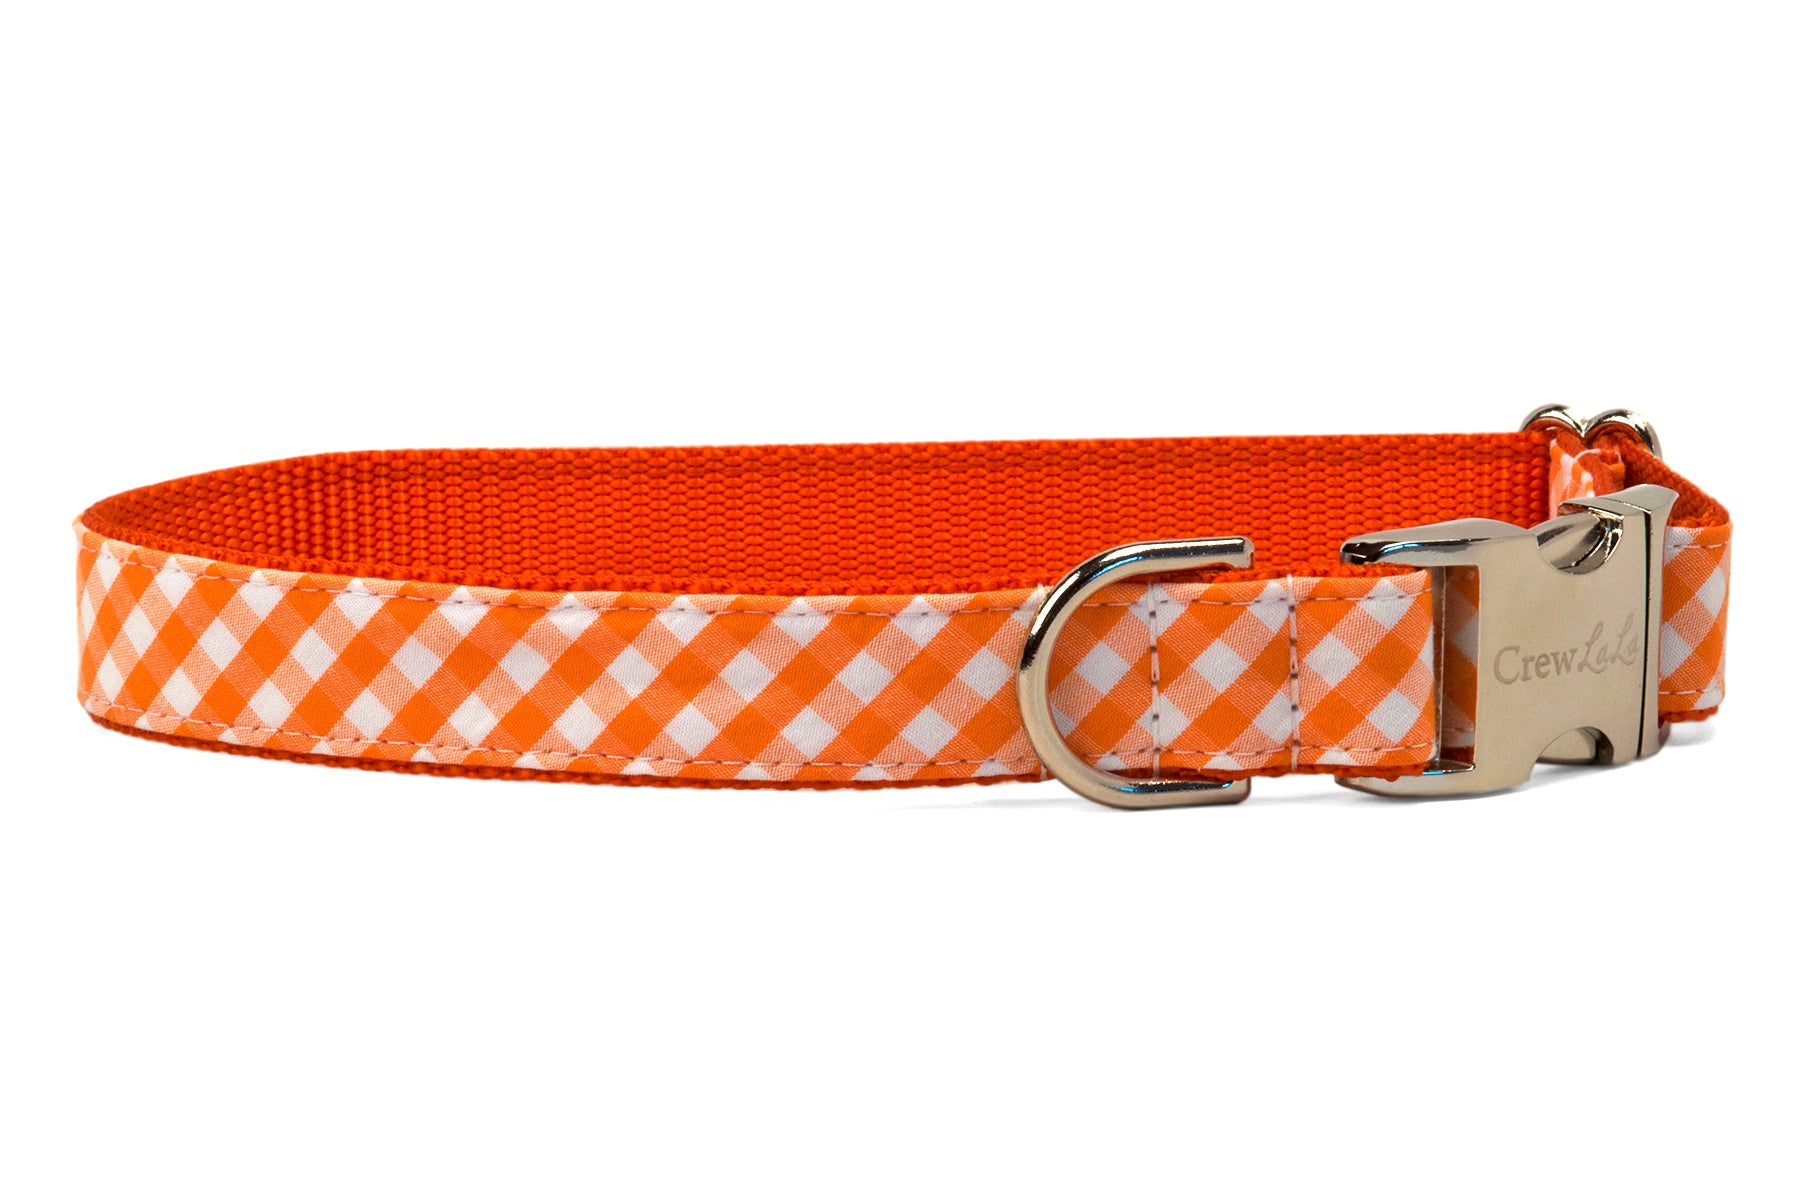 Texas Burnt Orange on Orange Check Bow Tie Dog Collar - Crew LaLa